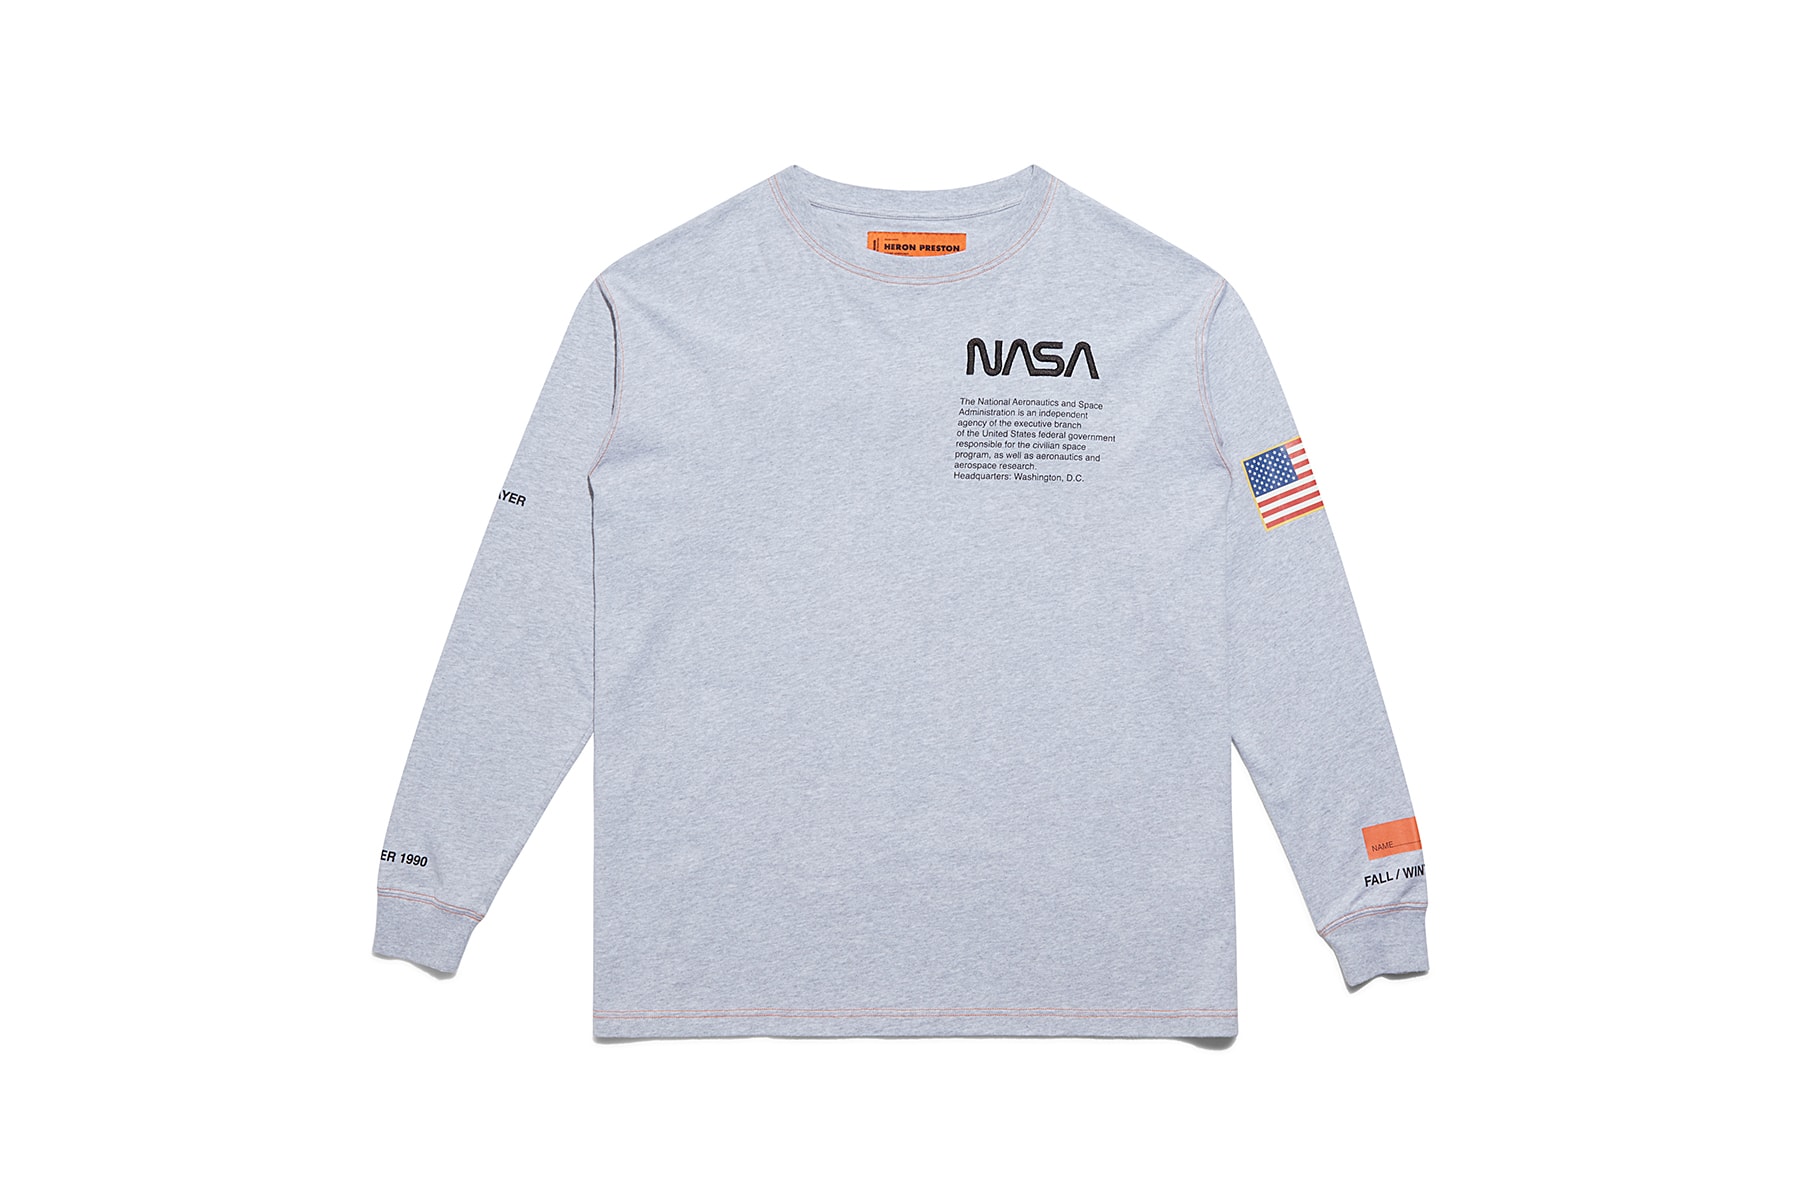 heron preston public figure fall winter 2018 collaboration nasa grey pullover longsleeve tee shirt american flag logo